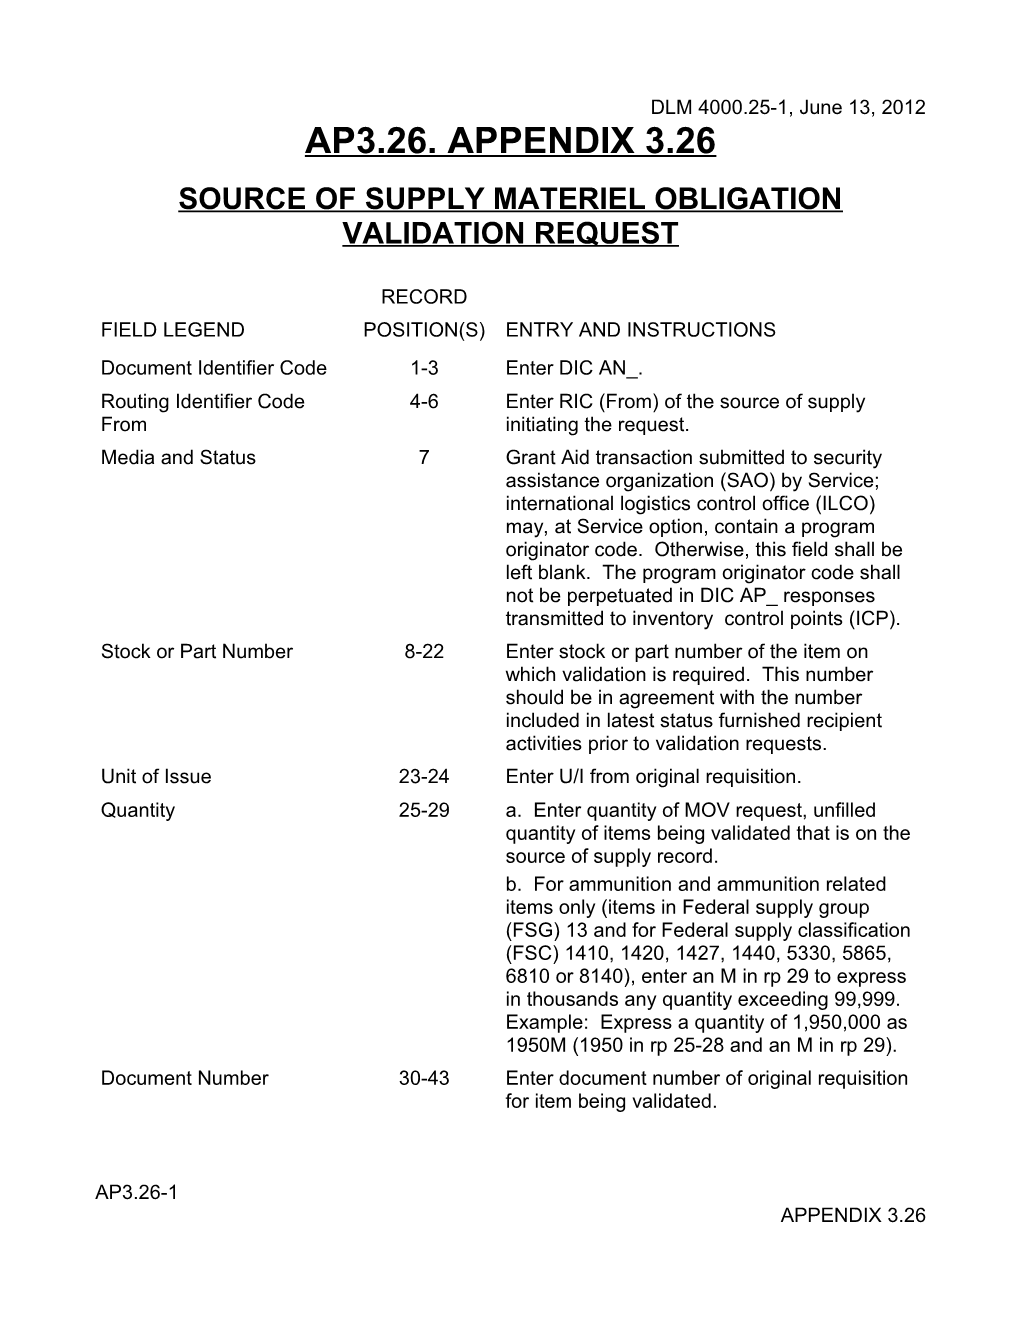 Appendix 3.26 - Source of Supply Materiel Obligation Validation Request